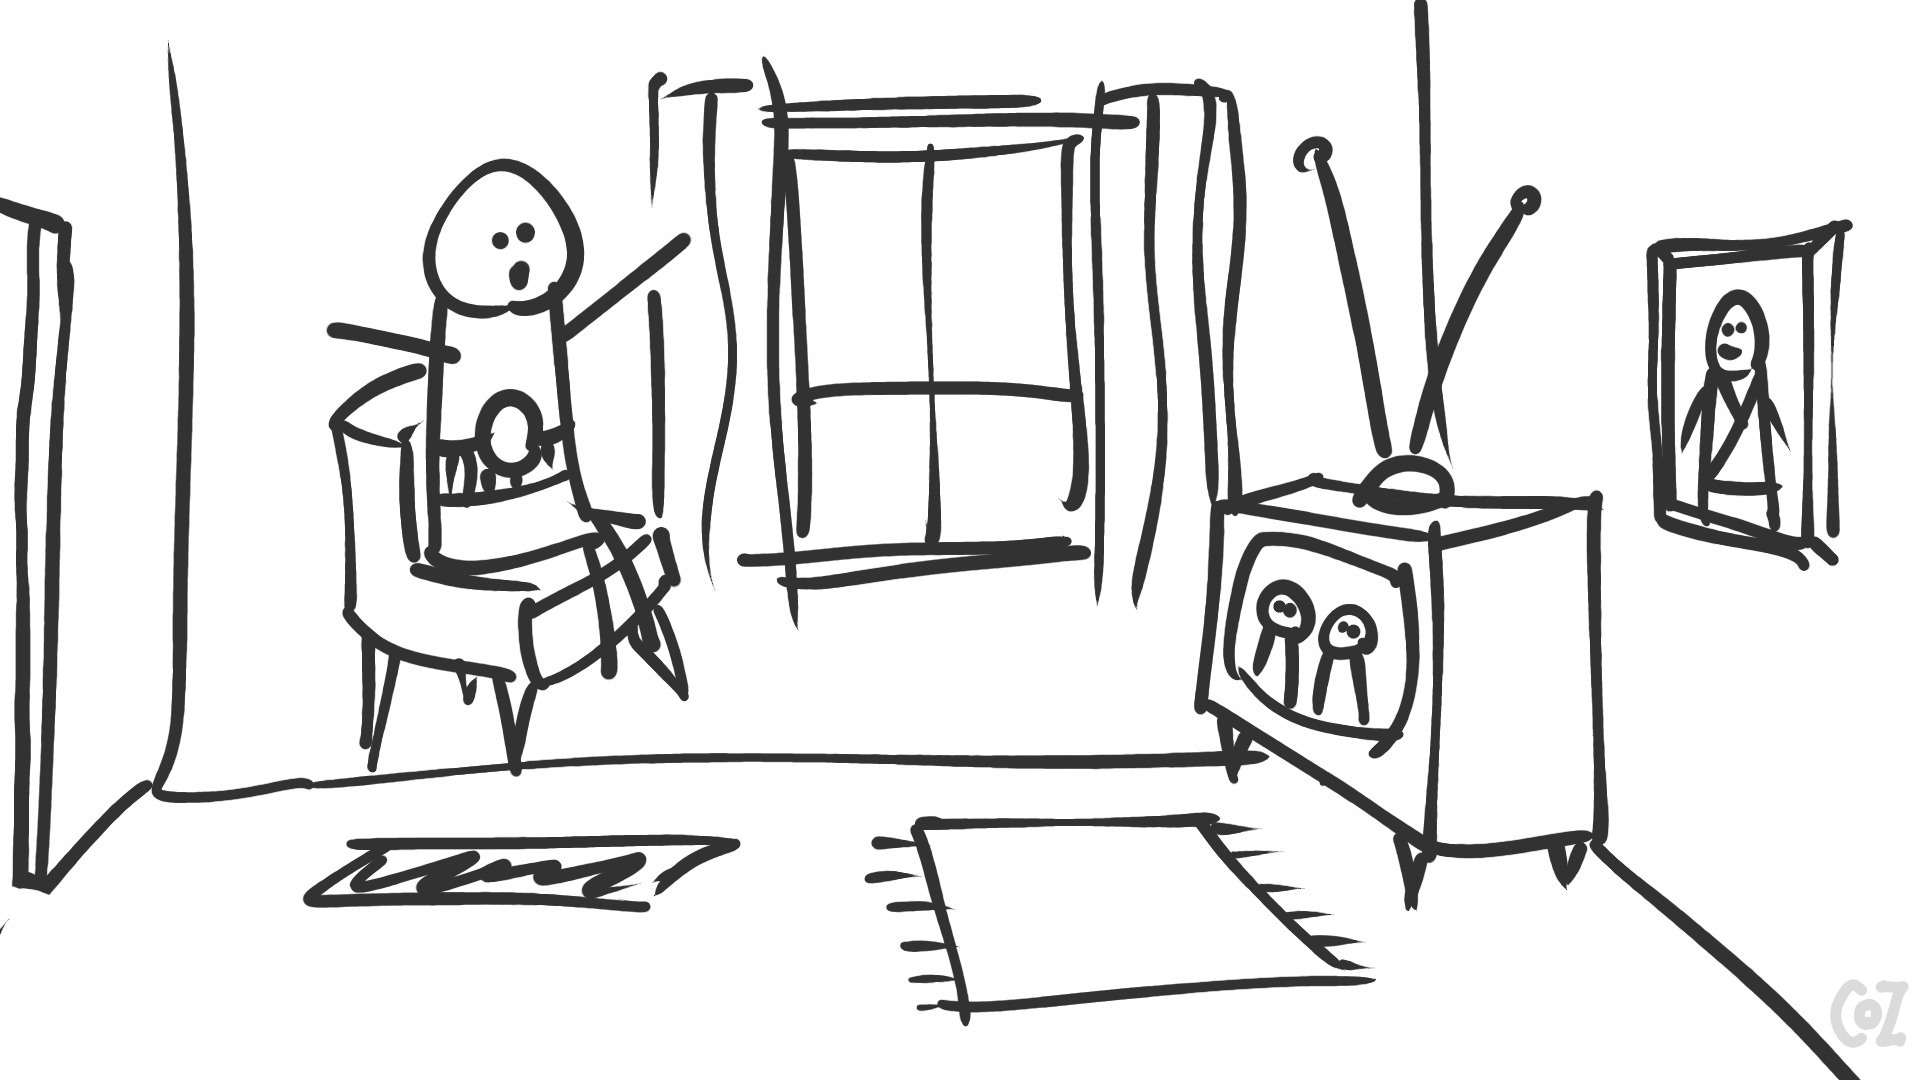 Threepio in the Living Room (sketch)